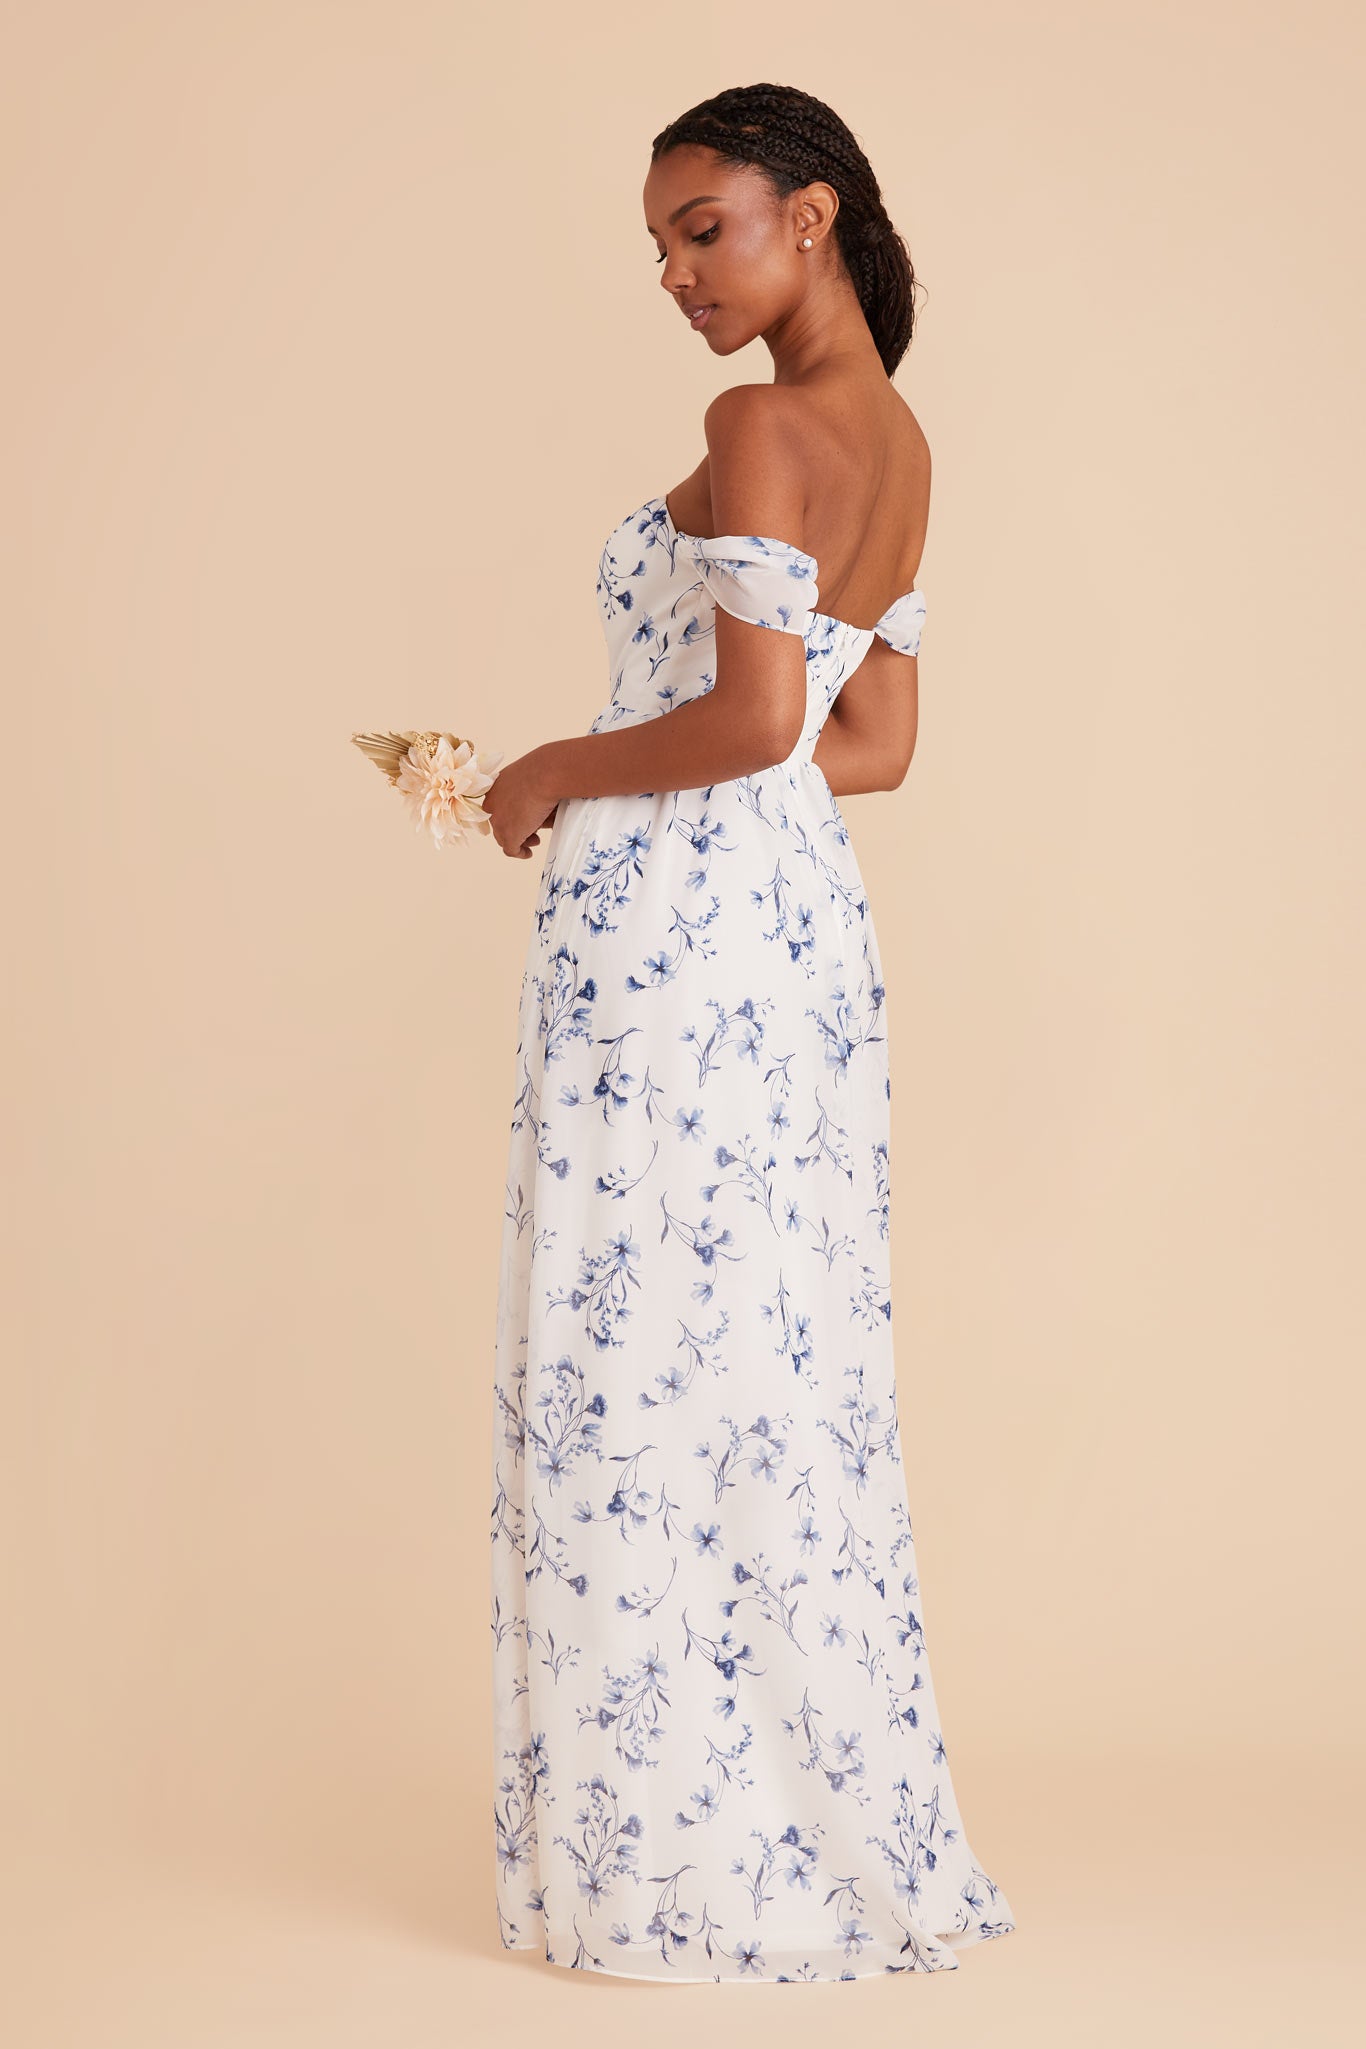 Blue Le Fleur August Convertible Dress by Birdy Grey